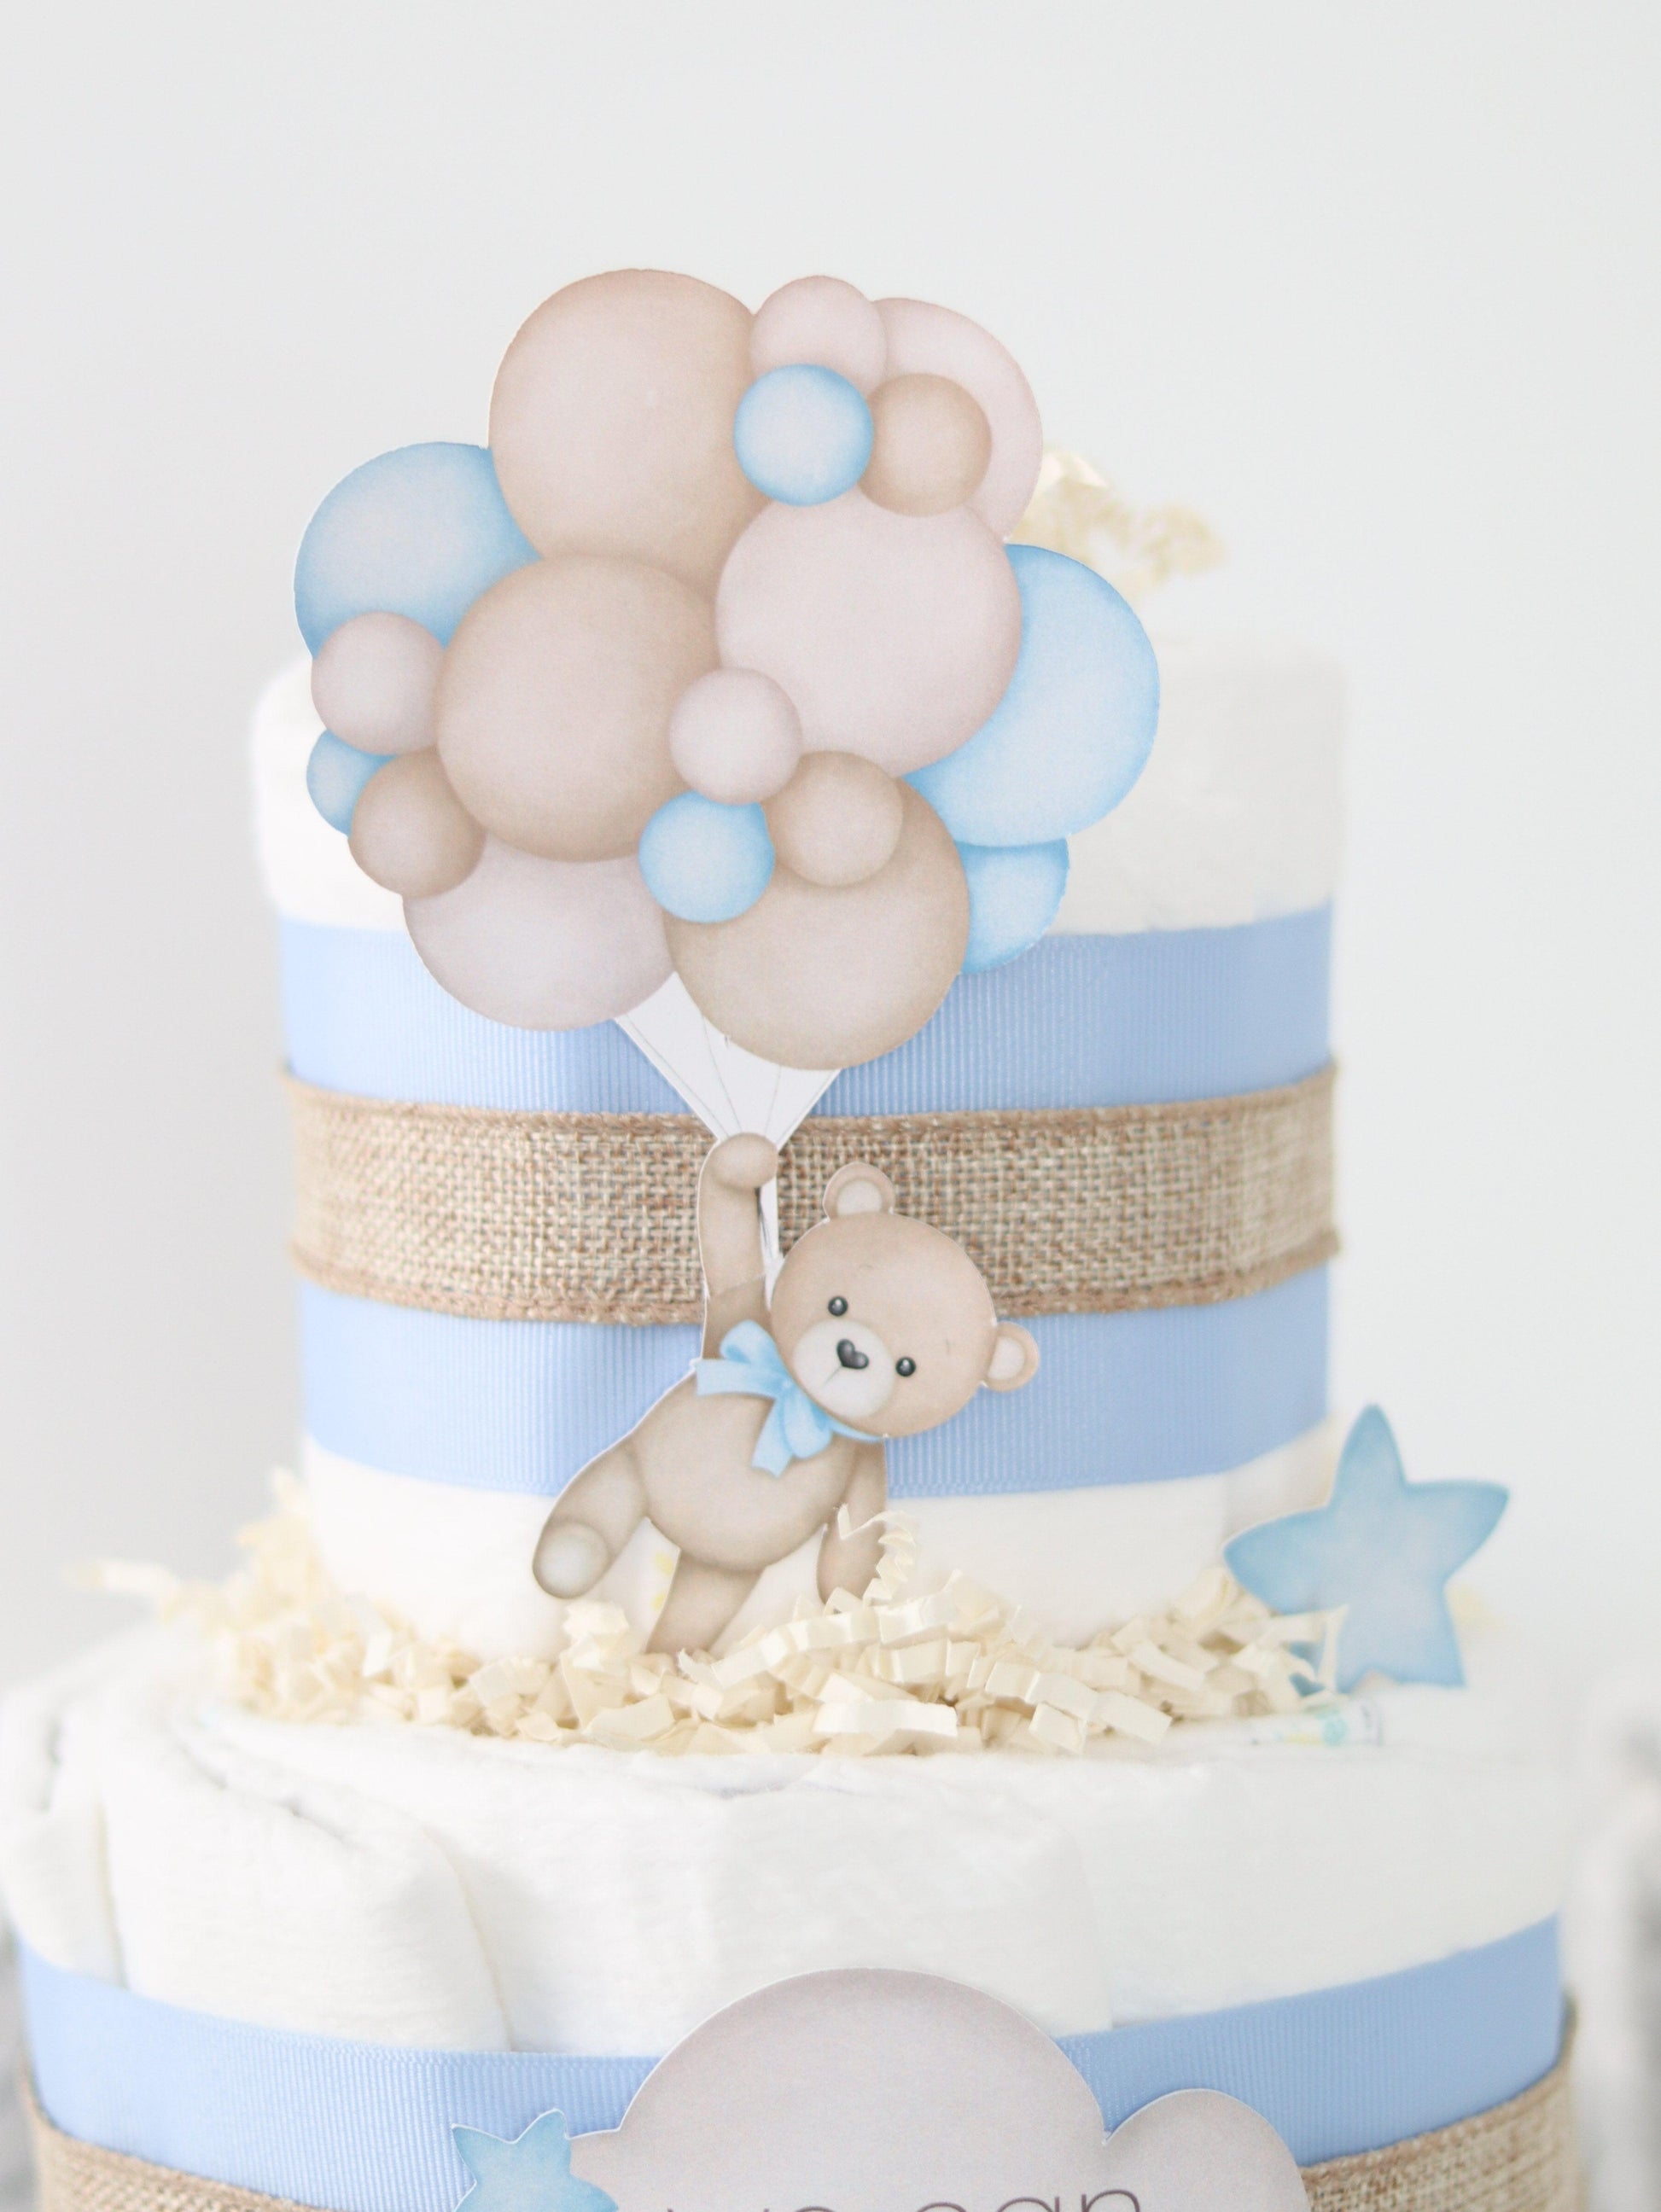 diaper cake decoration teddy bear holding balloons